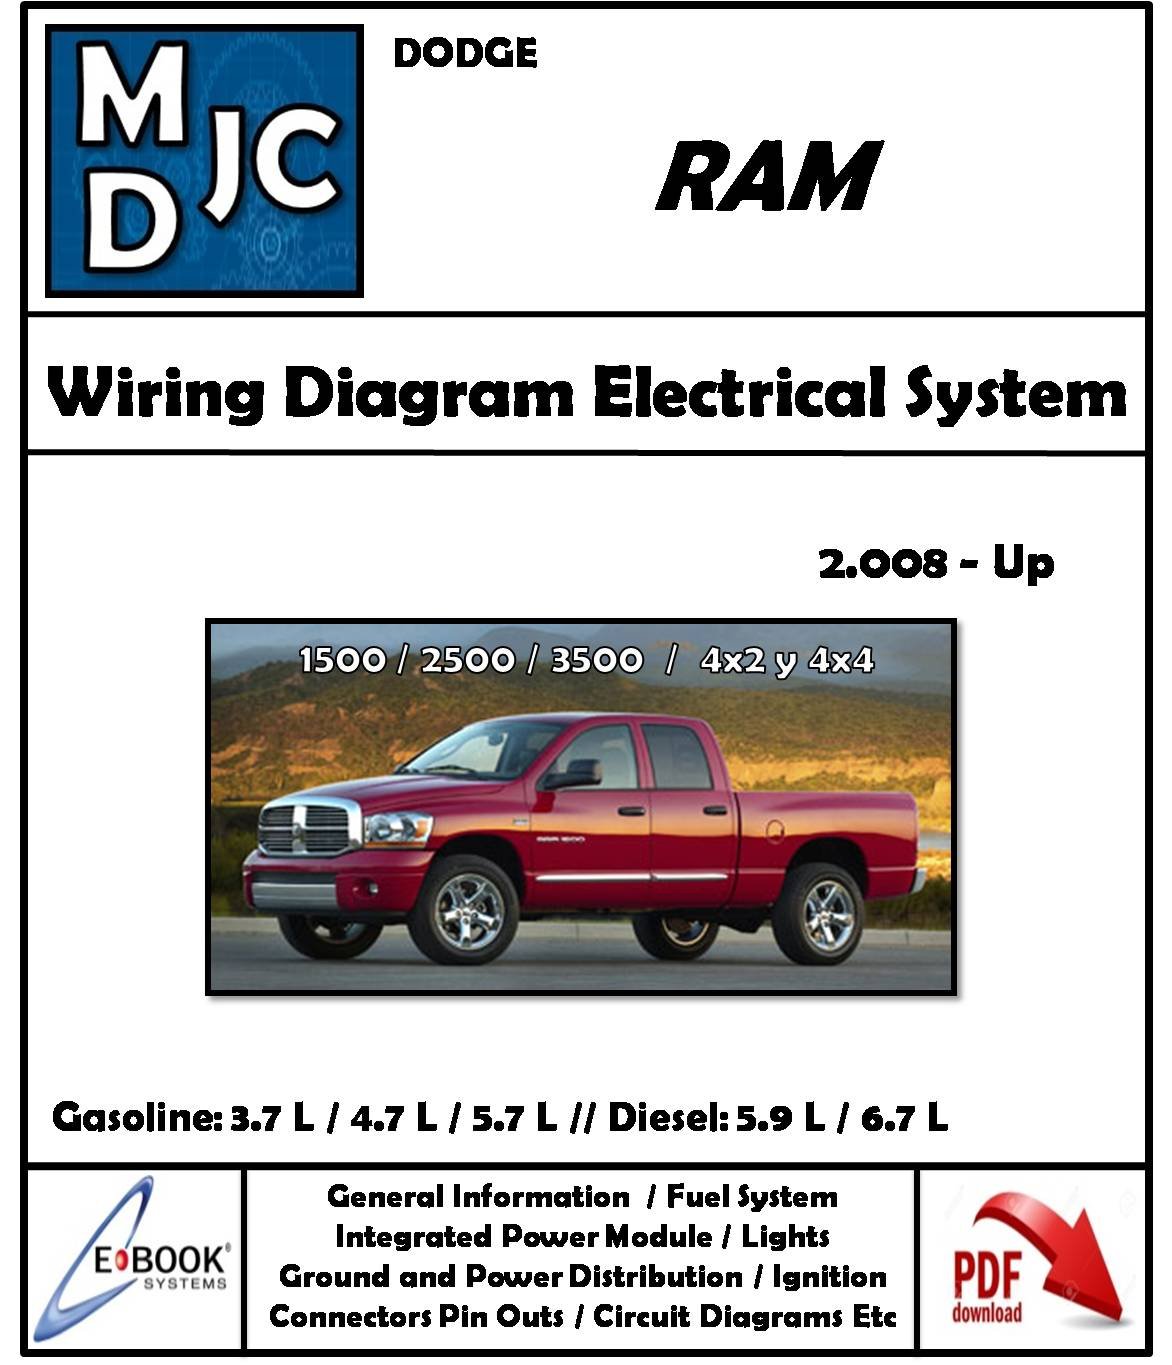 Dodge RAM 2008-Up